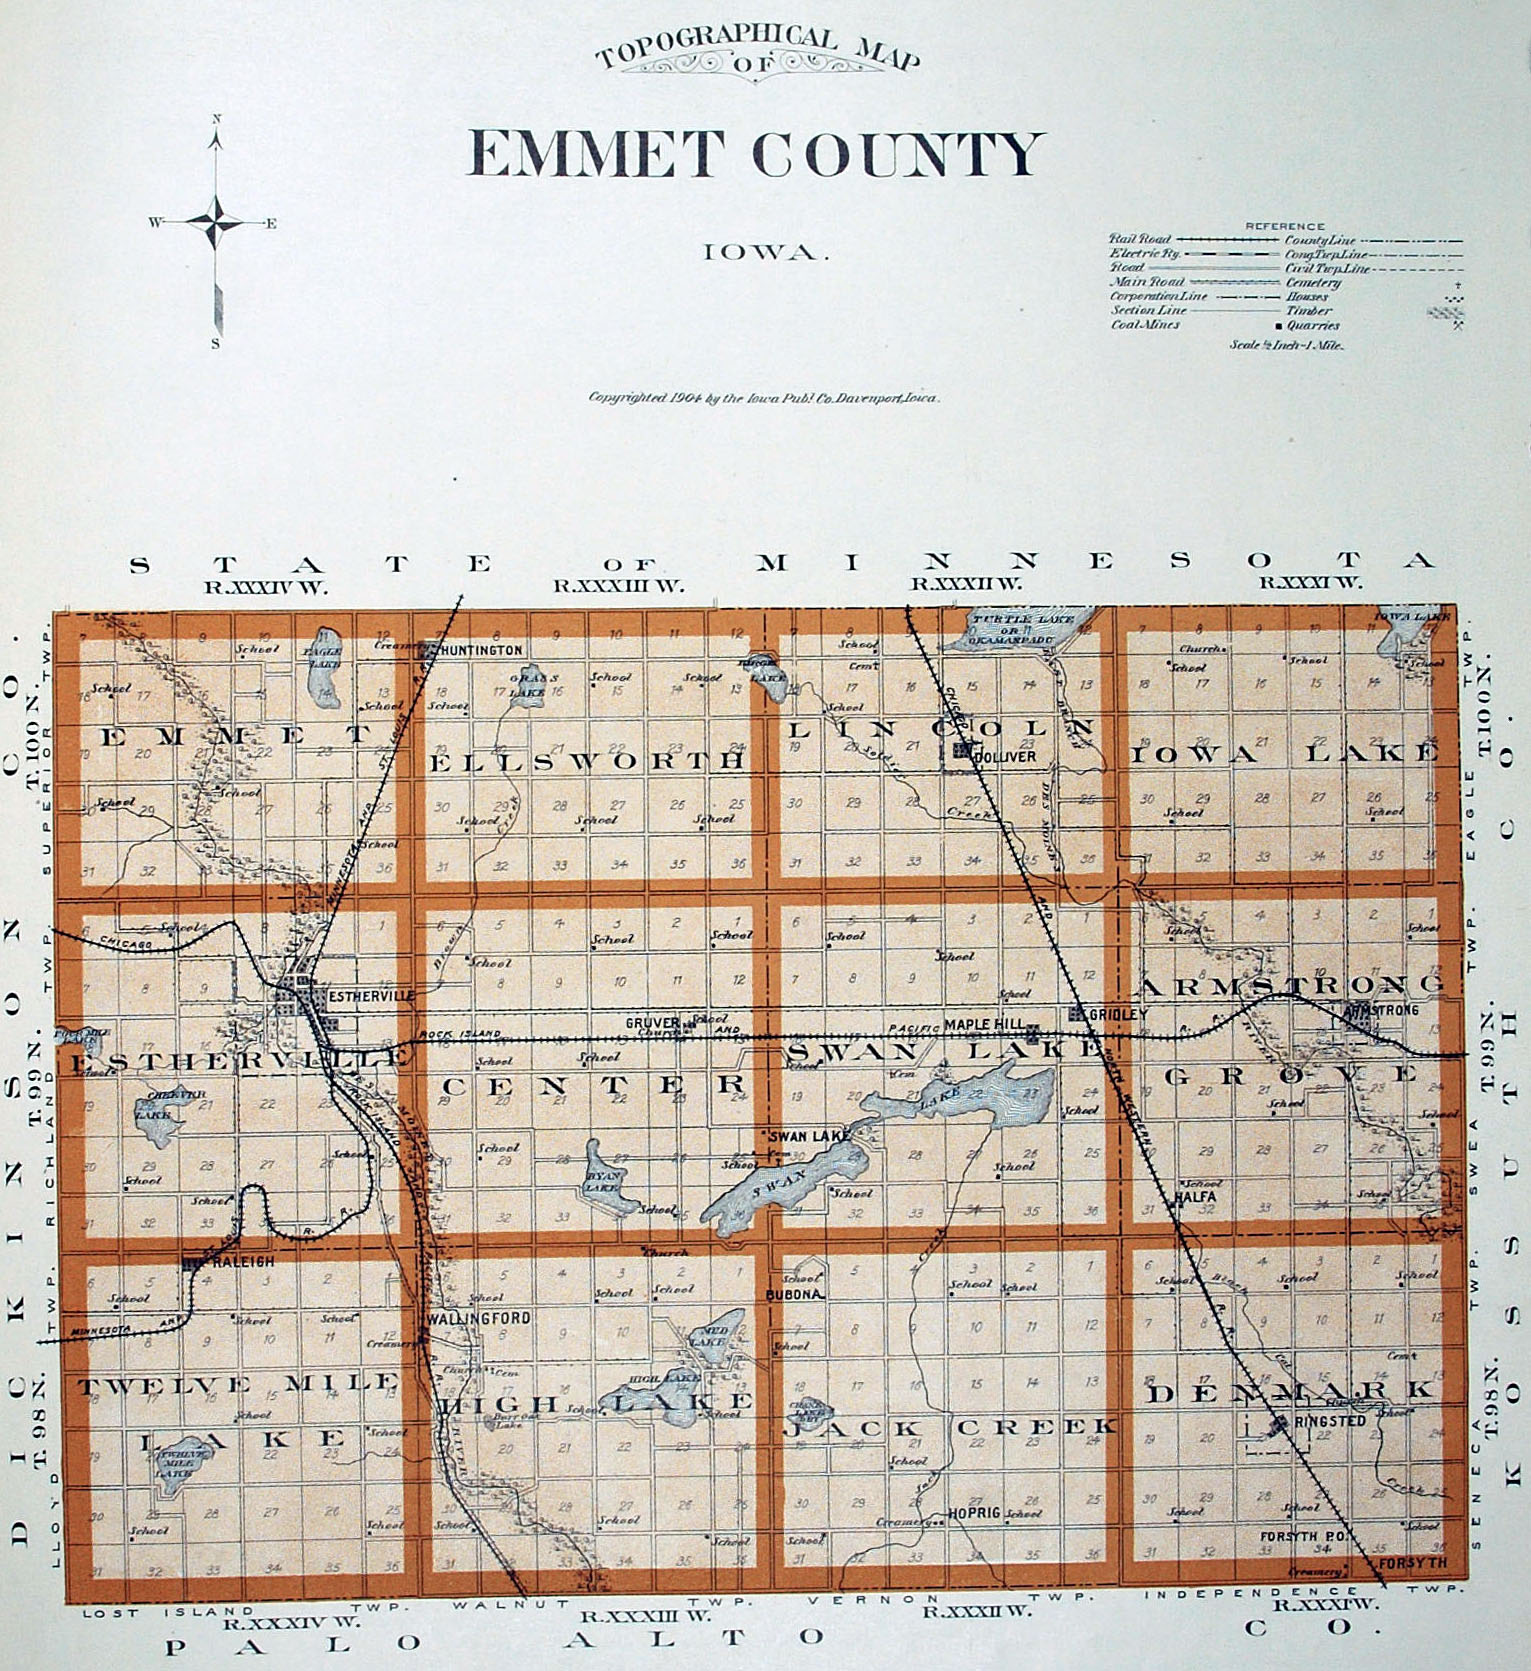 emmet county iowa 1904 map